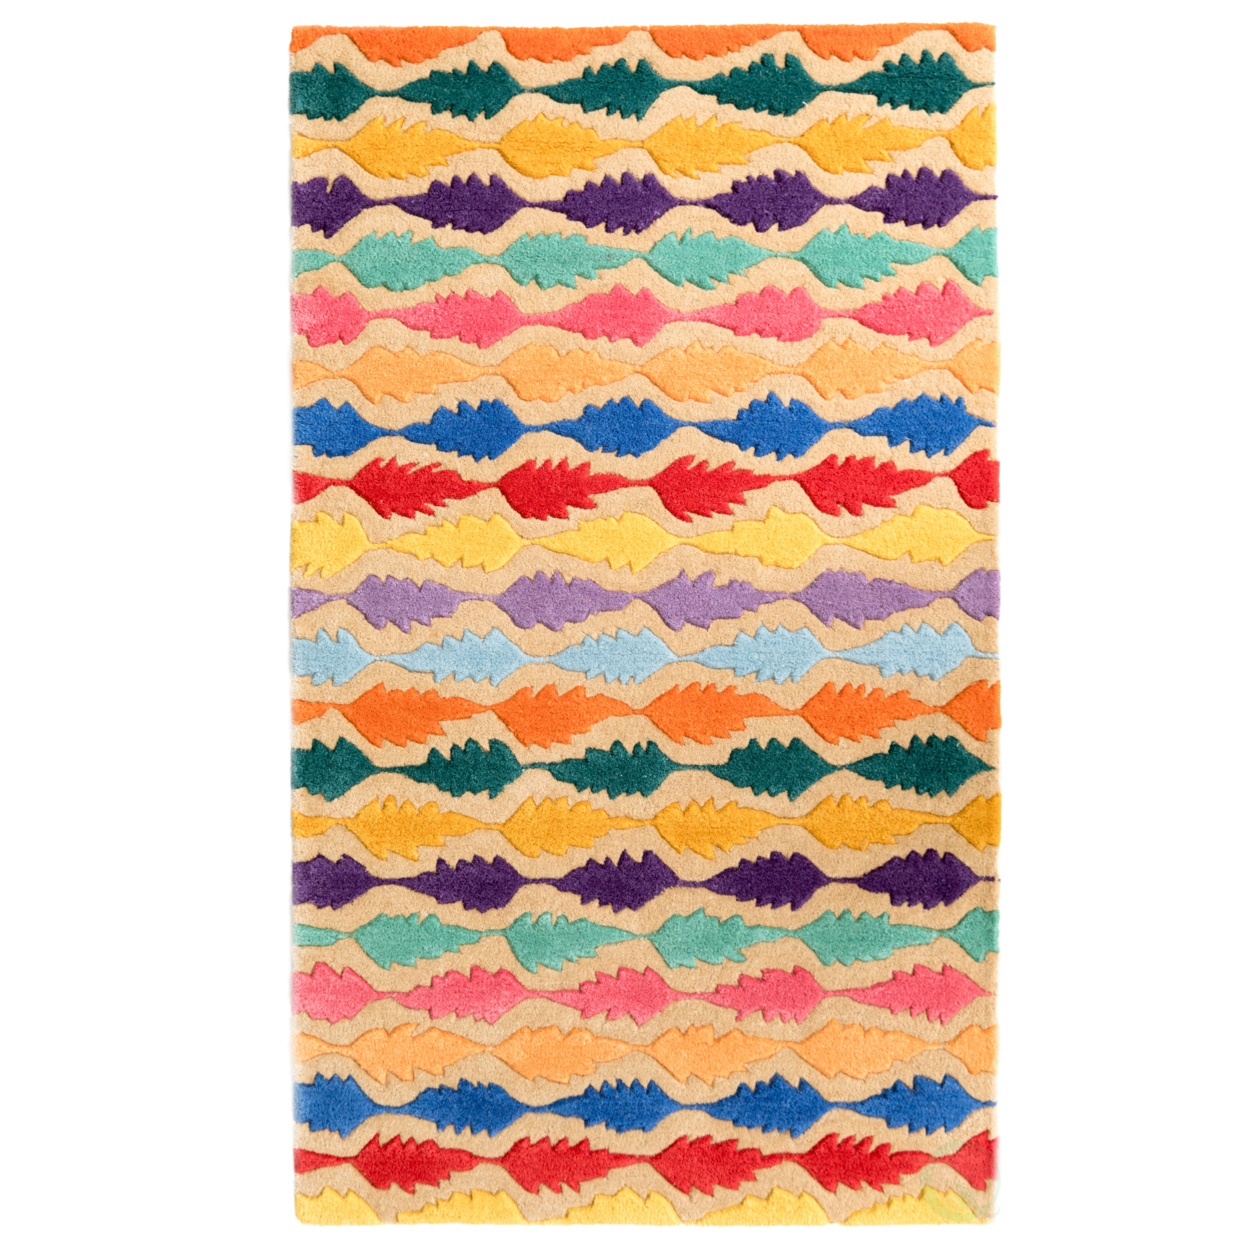 Handtufted Multicolored Leaf Design 100 Percent Wool Area Rug, 3' X 5' Rectangle